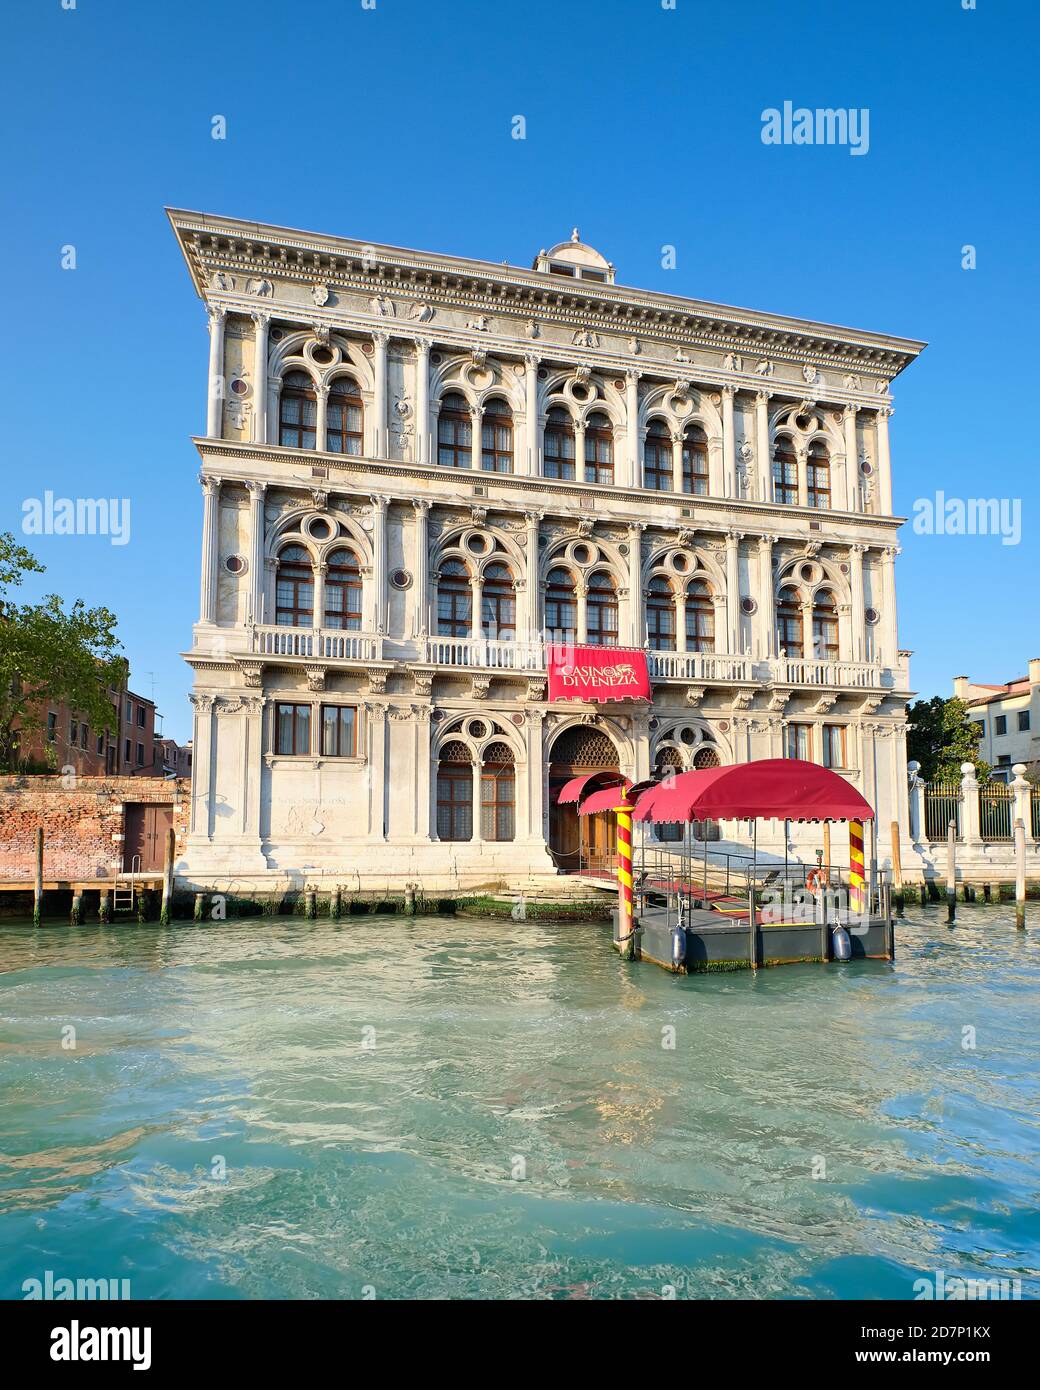 Casino di Venezia, historic building with a pier on Grand Canal on a ...